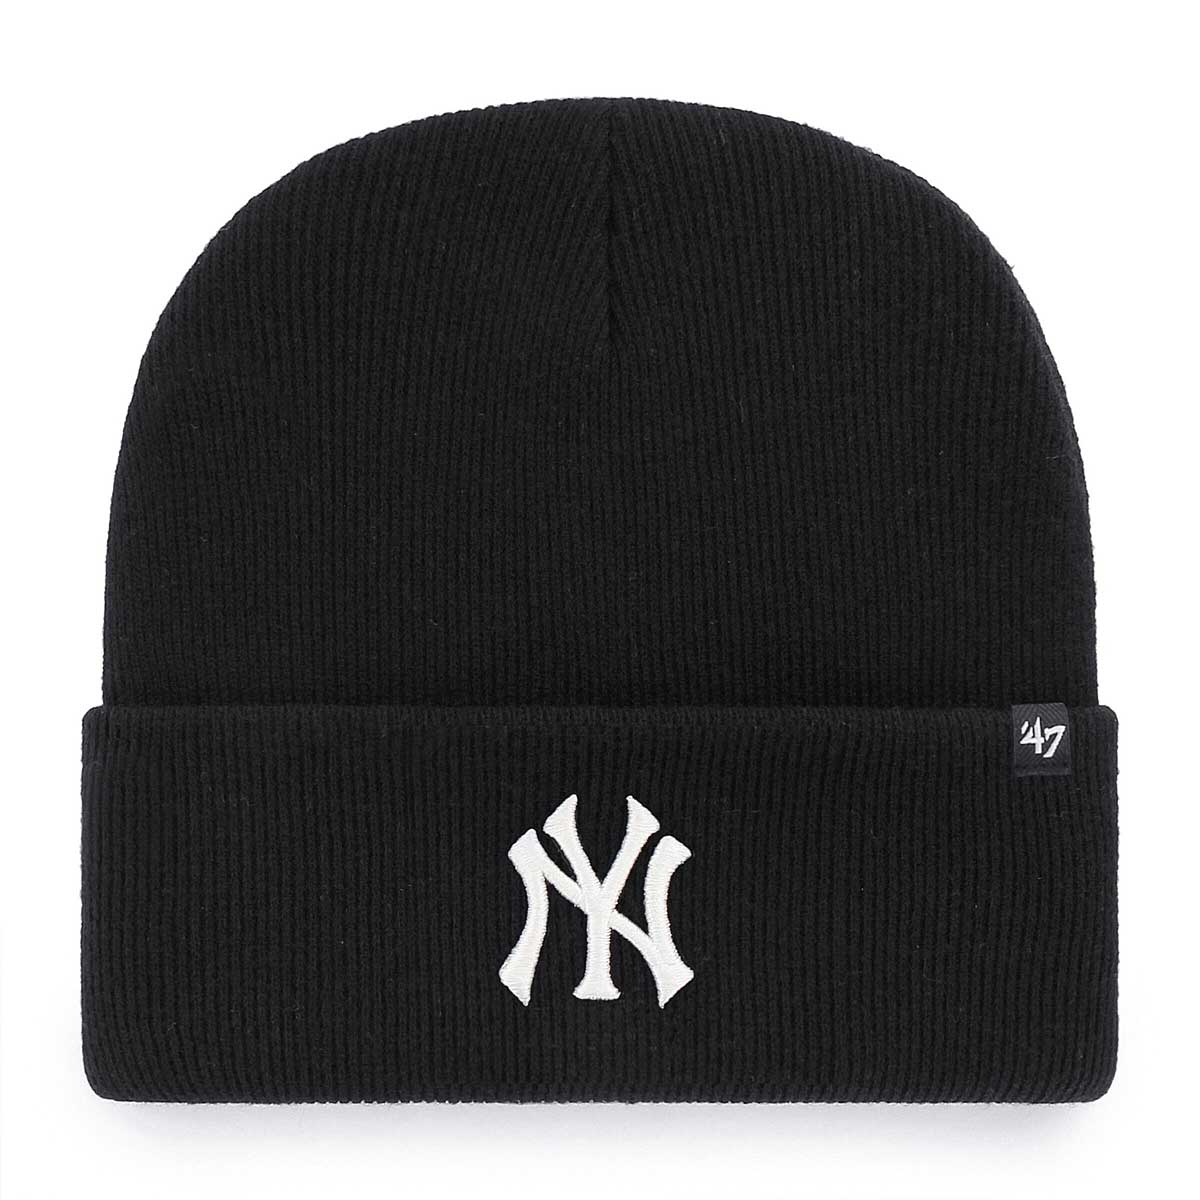 47 Mlb New York Yankees Haymaker '47 Cuff Knit, Black